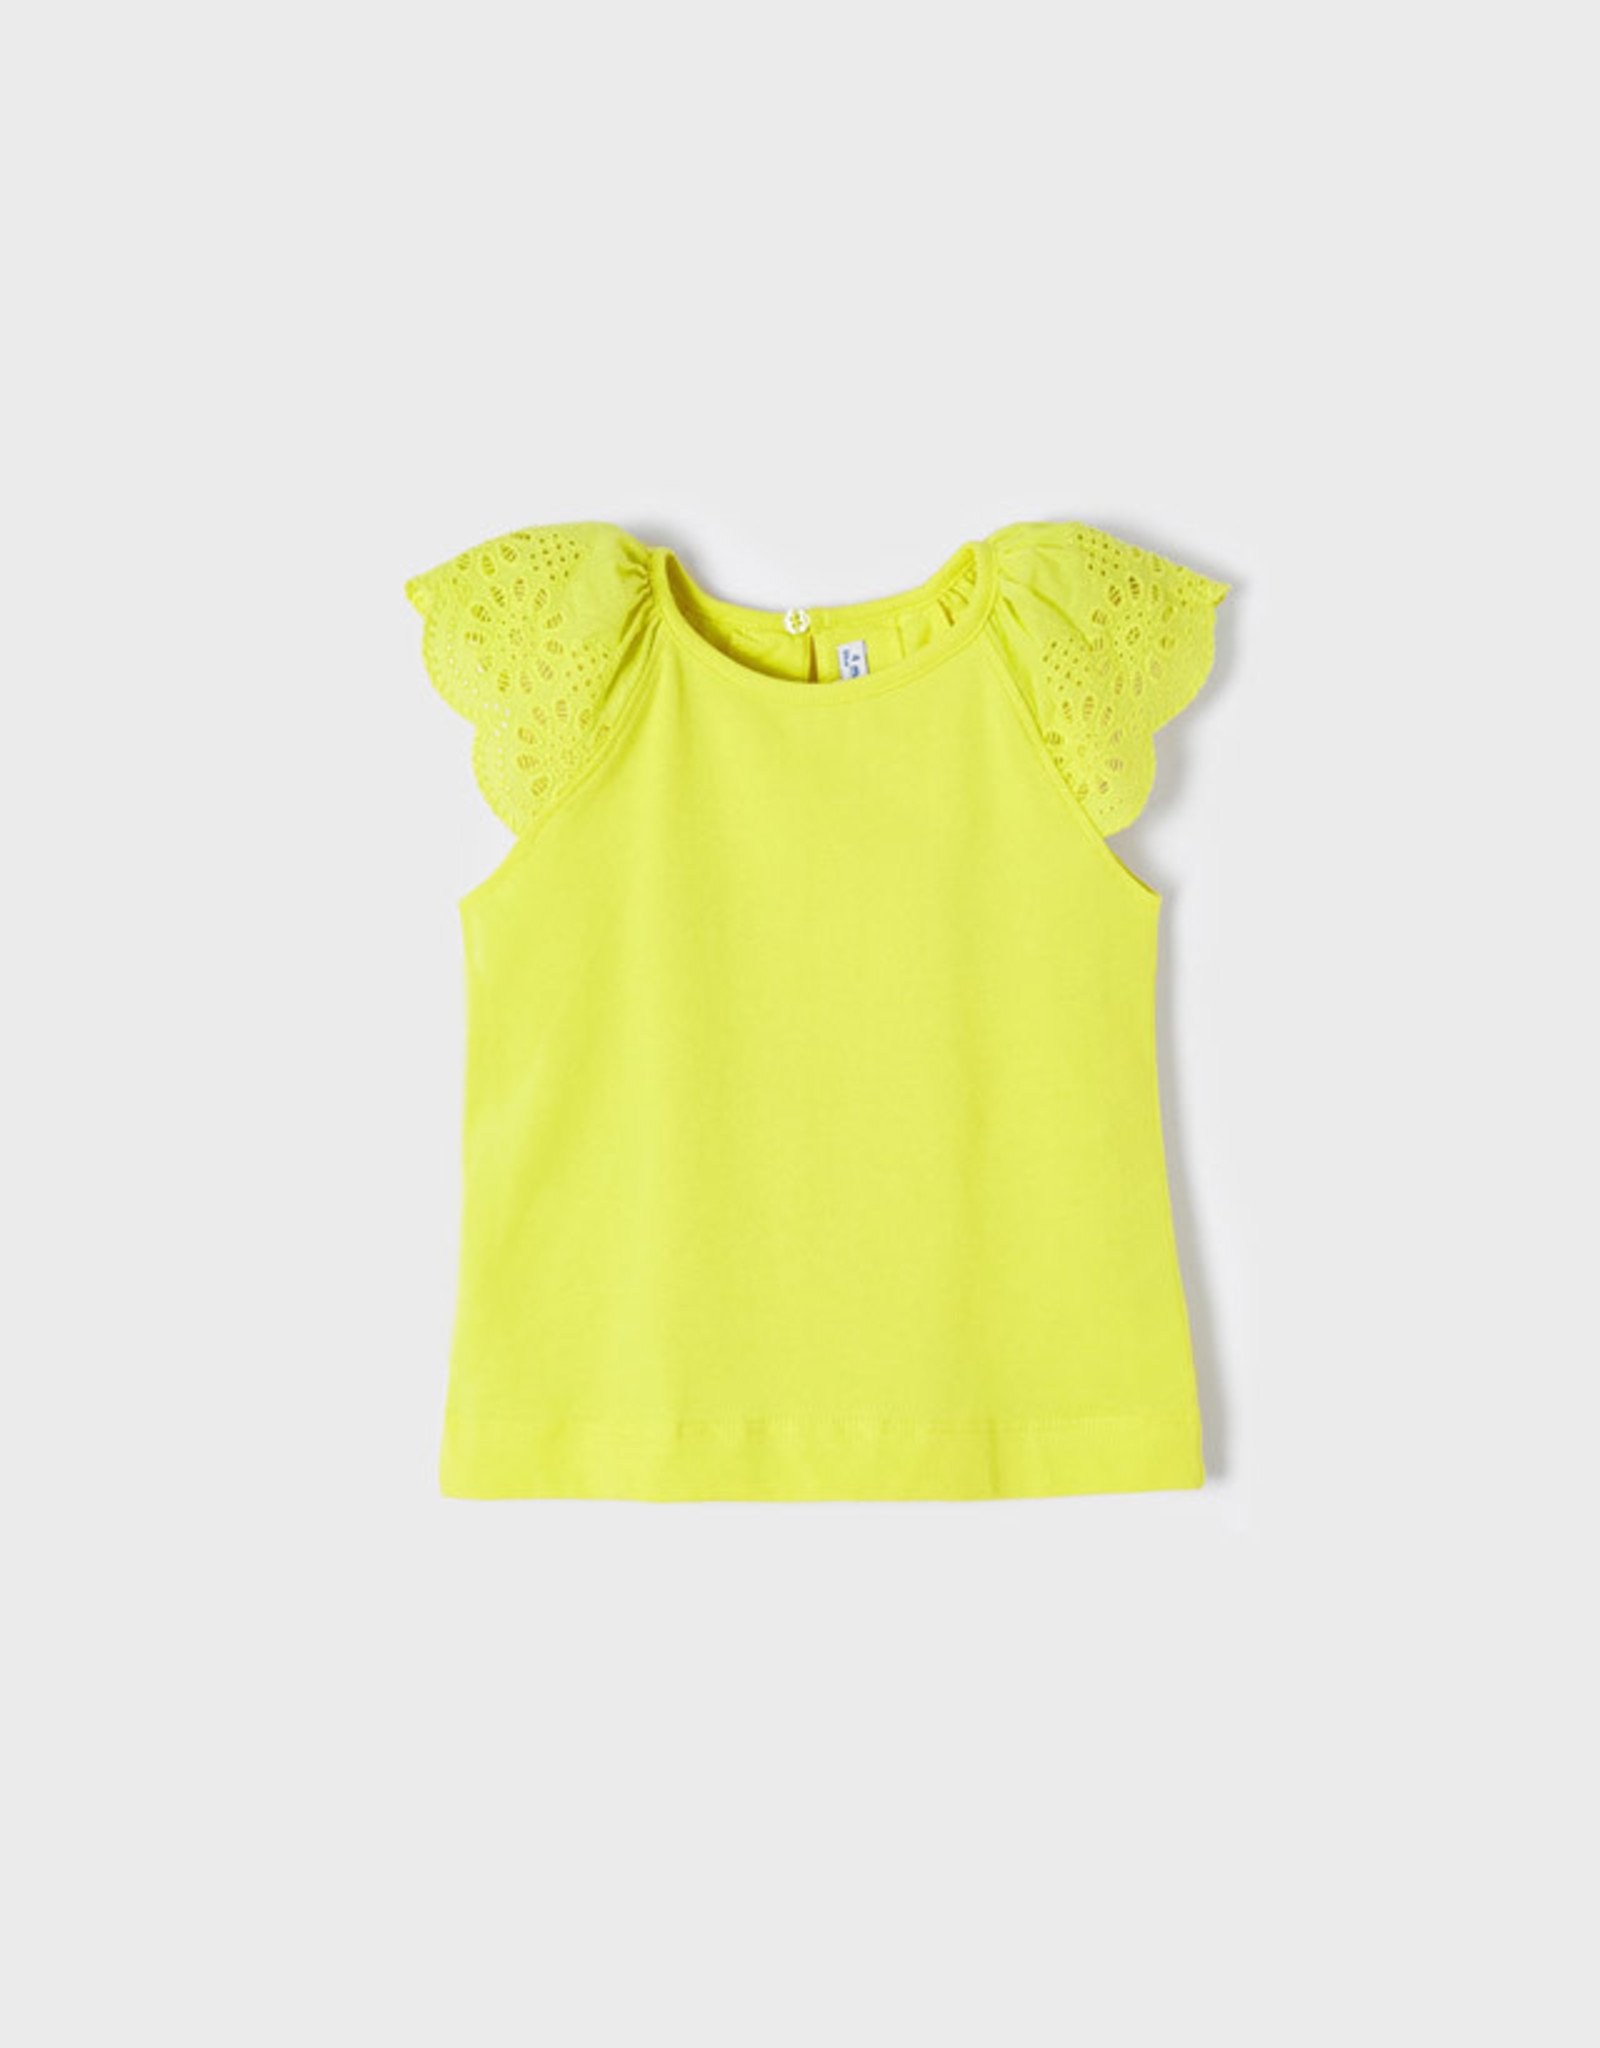 Mayoral Mini - Yellow Embroidered Sleeve shirt